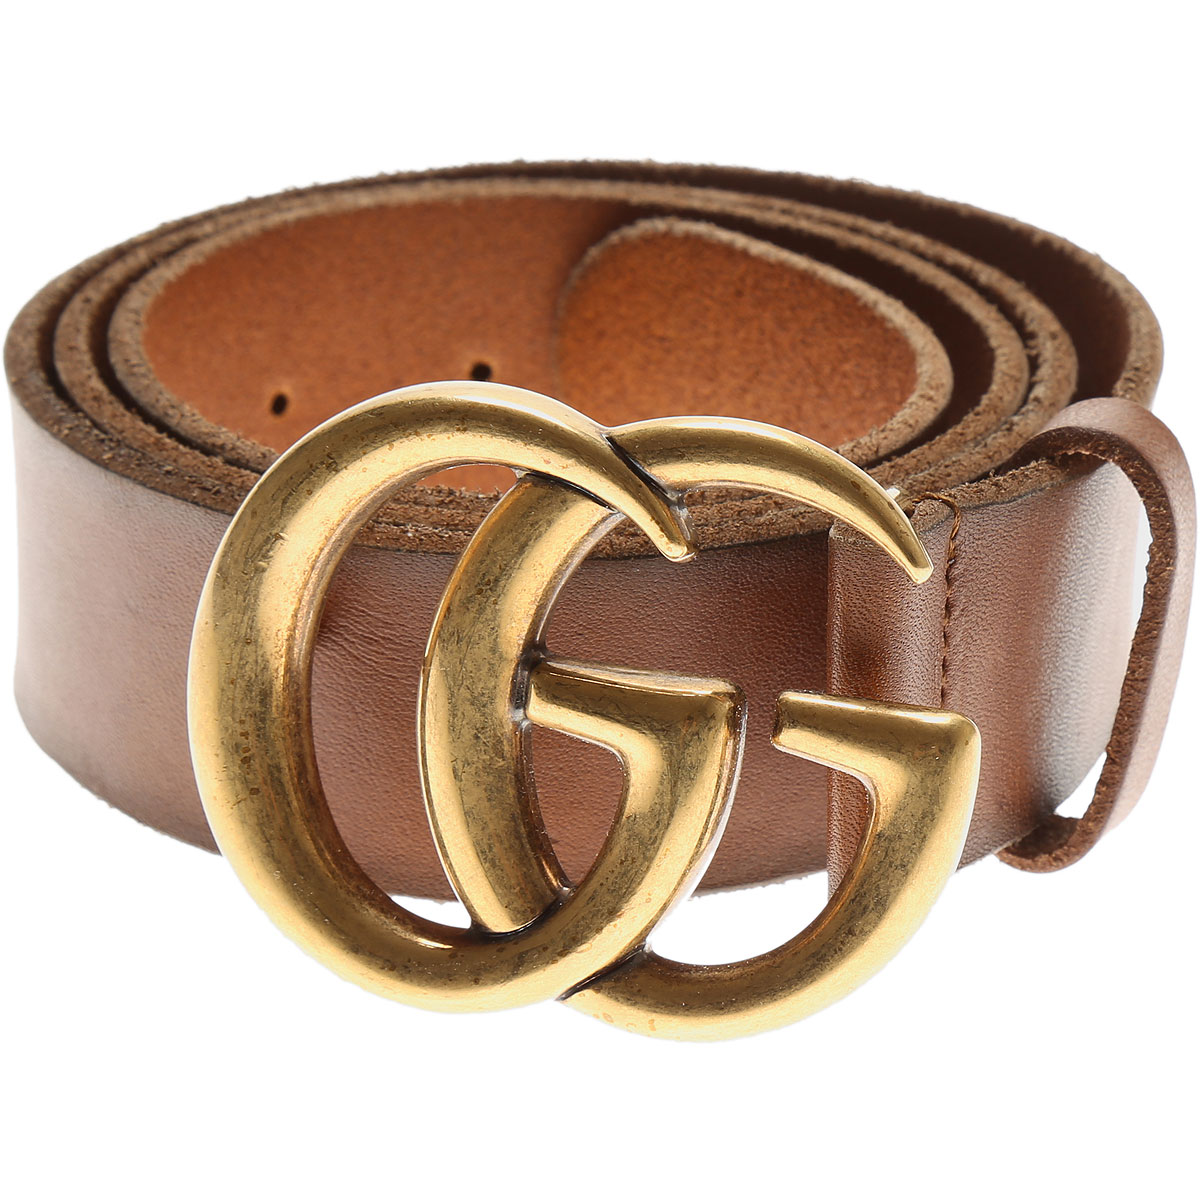 How Much Do Gucci Belts Cost - Best Design Idea